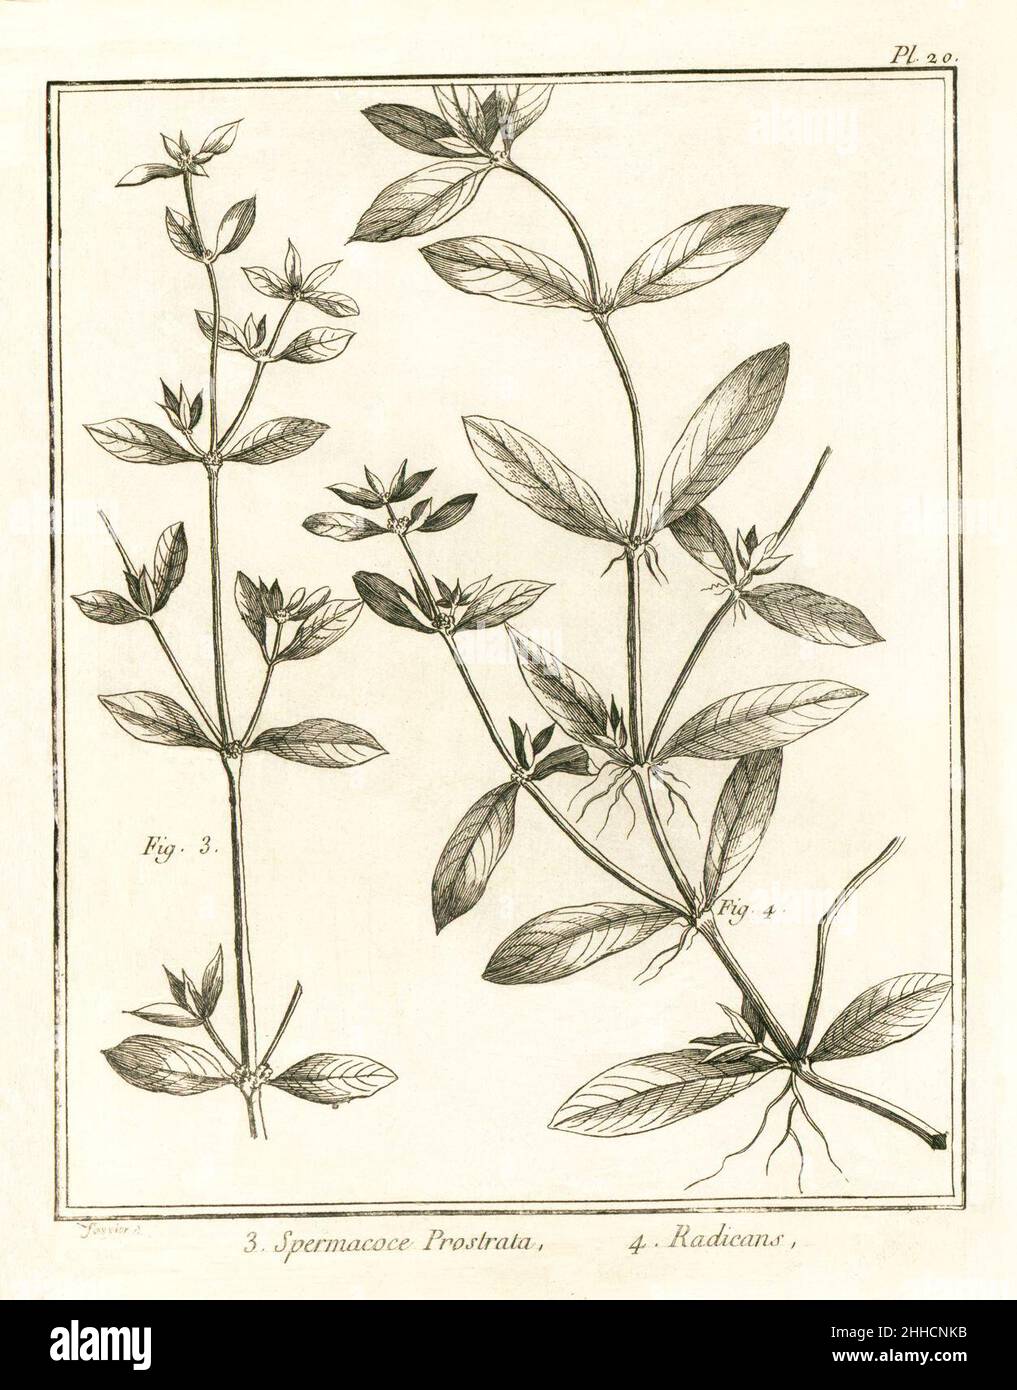 Spermacoce prostrata - radicans Aublet 1775 pl 20. Stock Photo